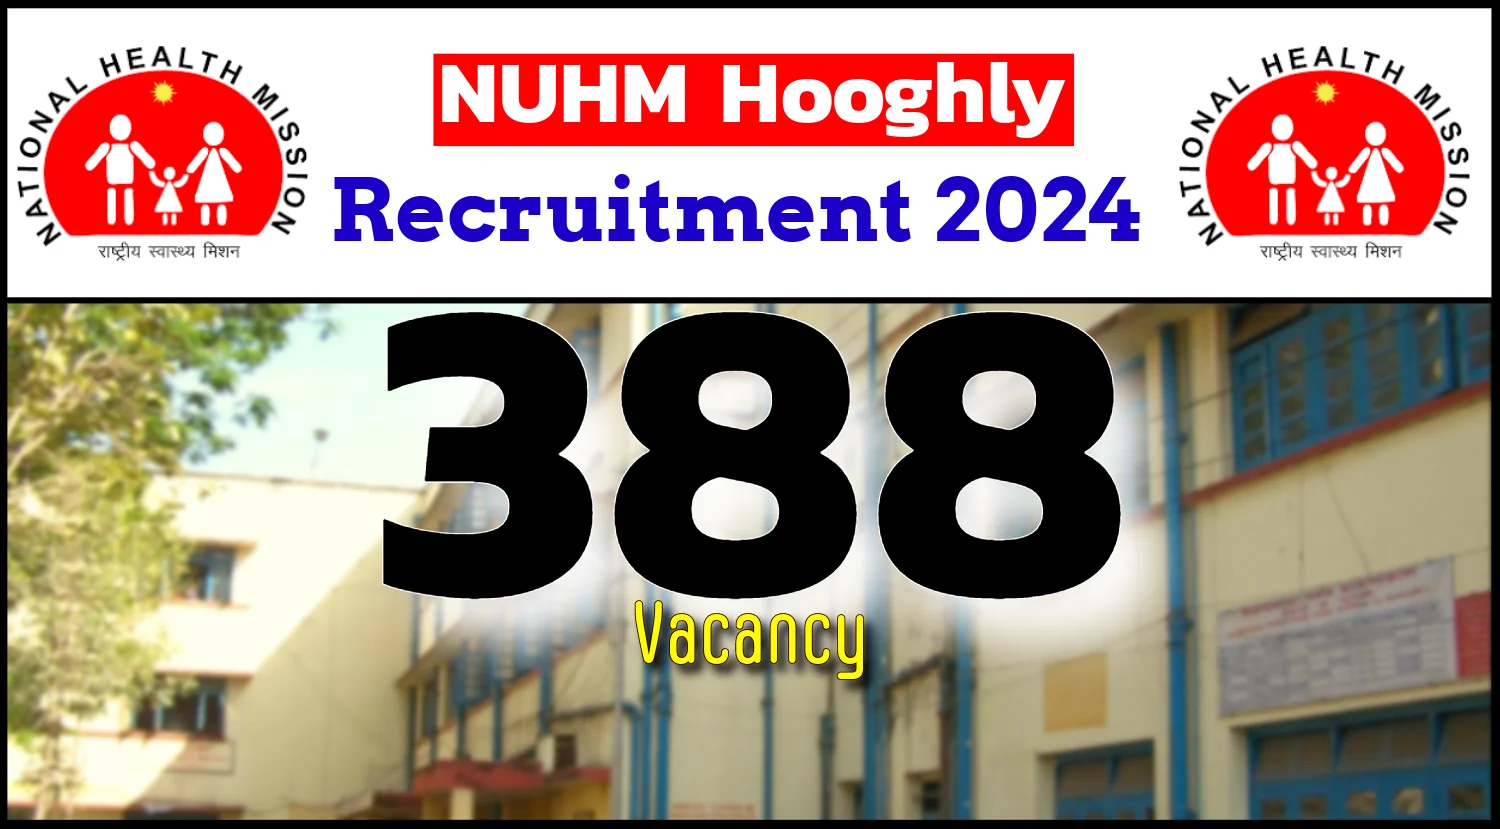 NUHM Hooghly Recruitment 2024